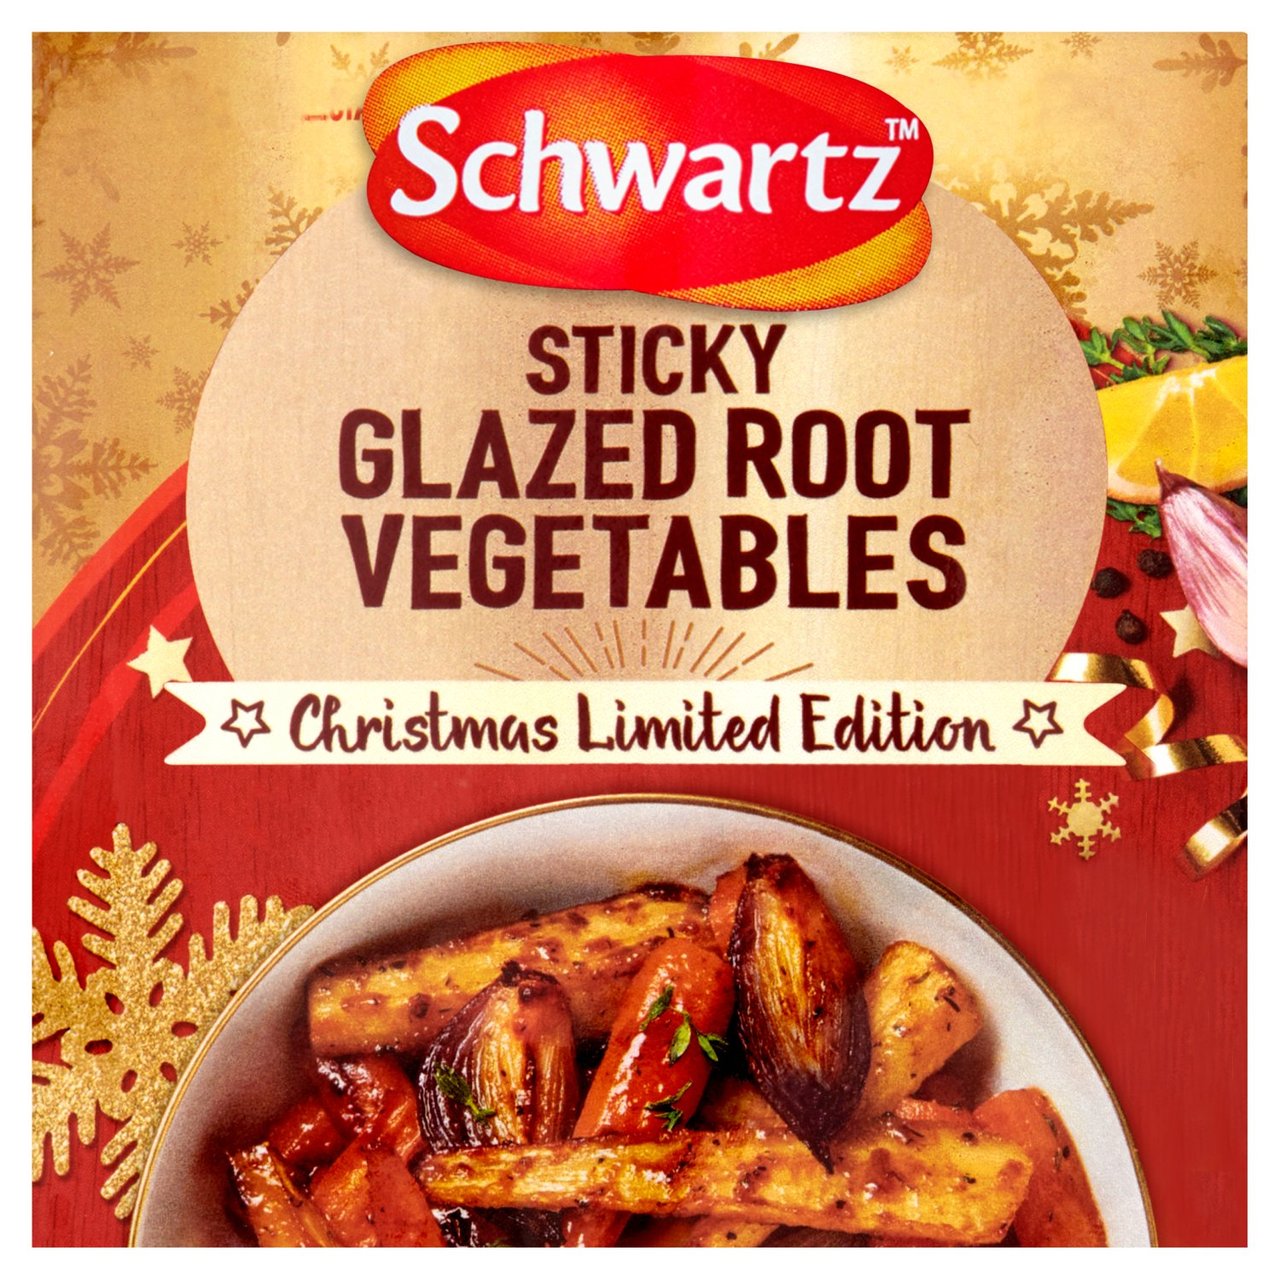 Schwartz Sticky Glazed Root Vegetables Limited Edition